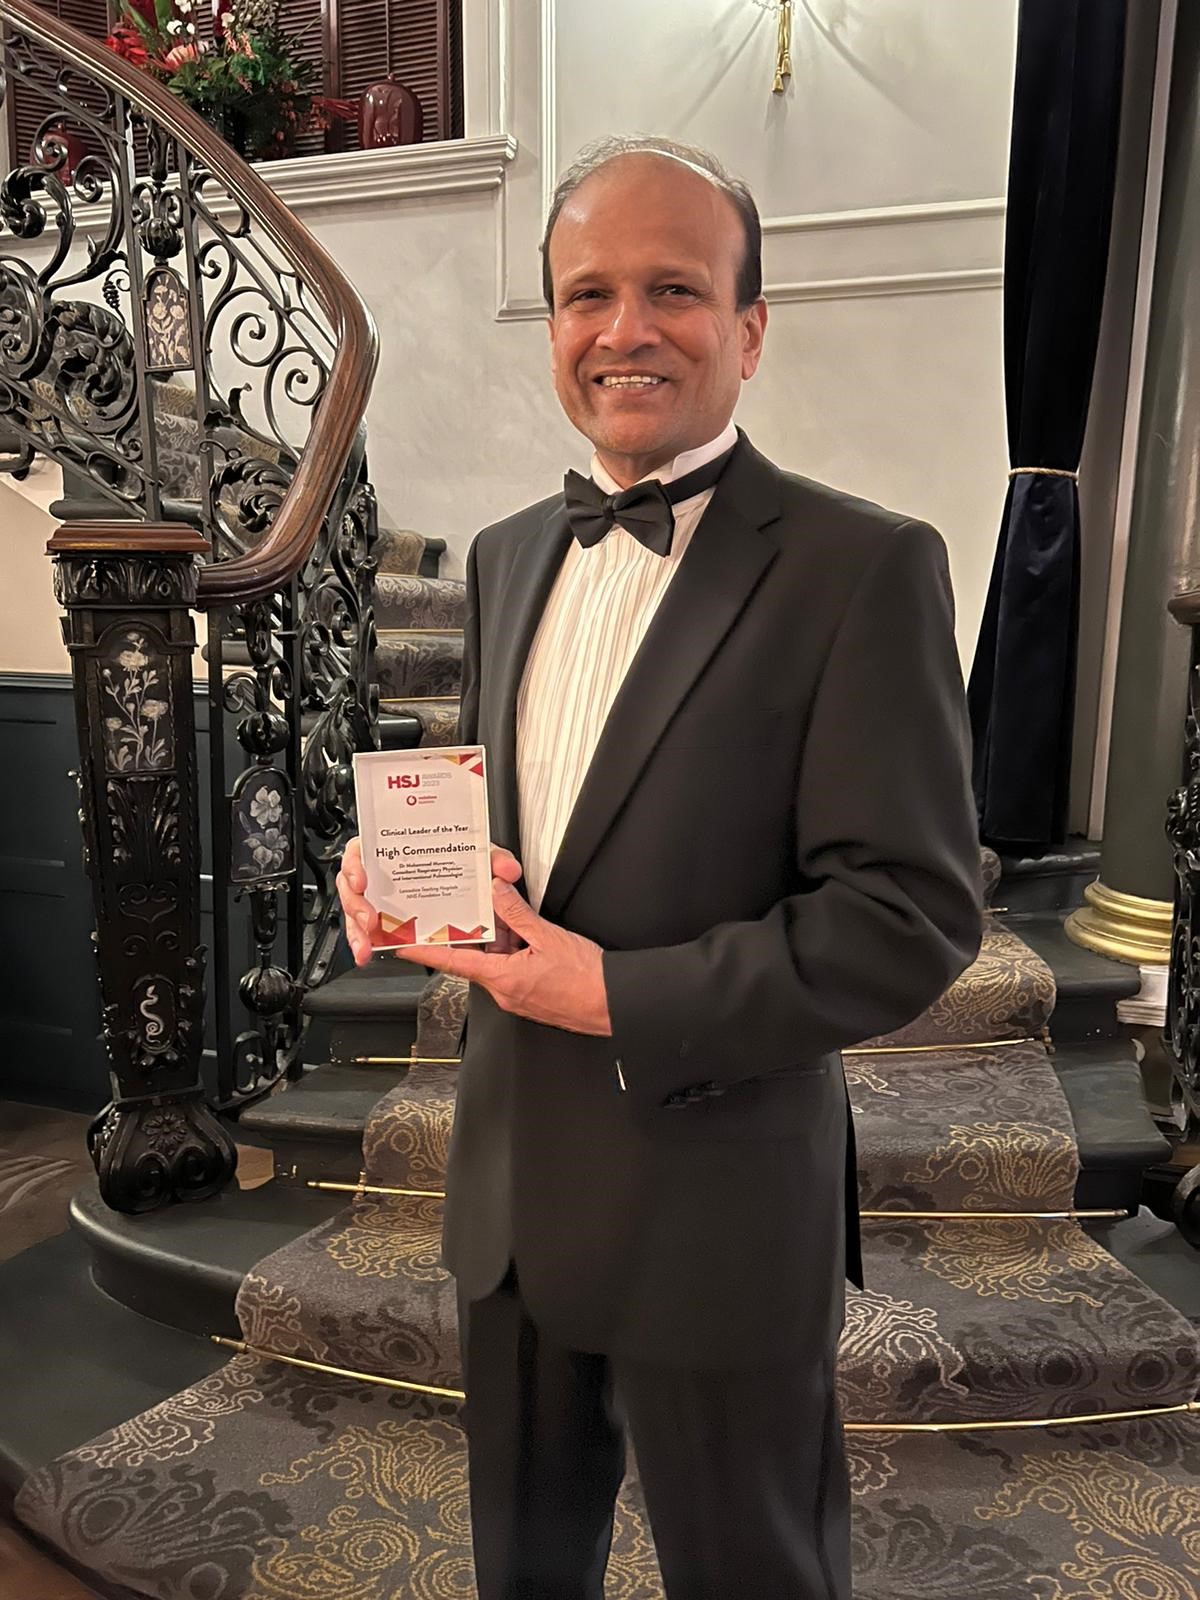 Dr Munavvar wearing a tux, smiling, holding an award plaque